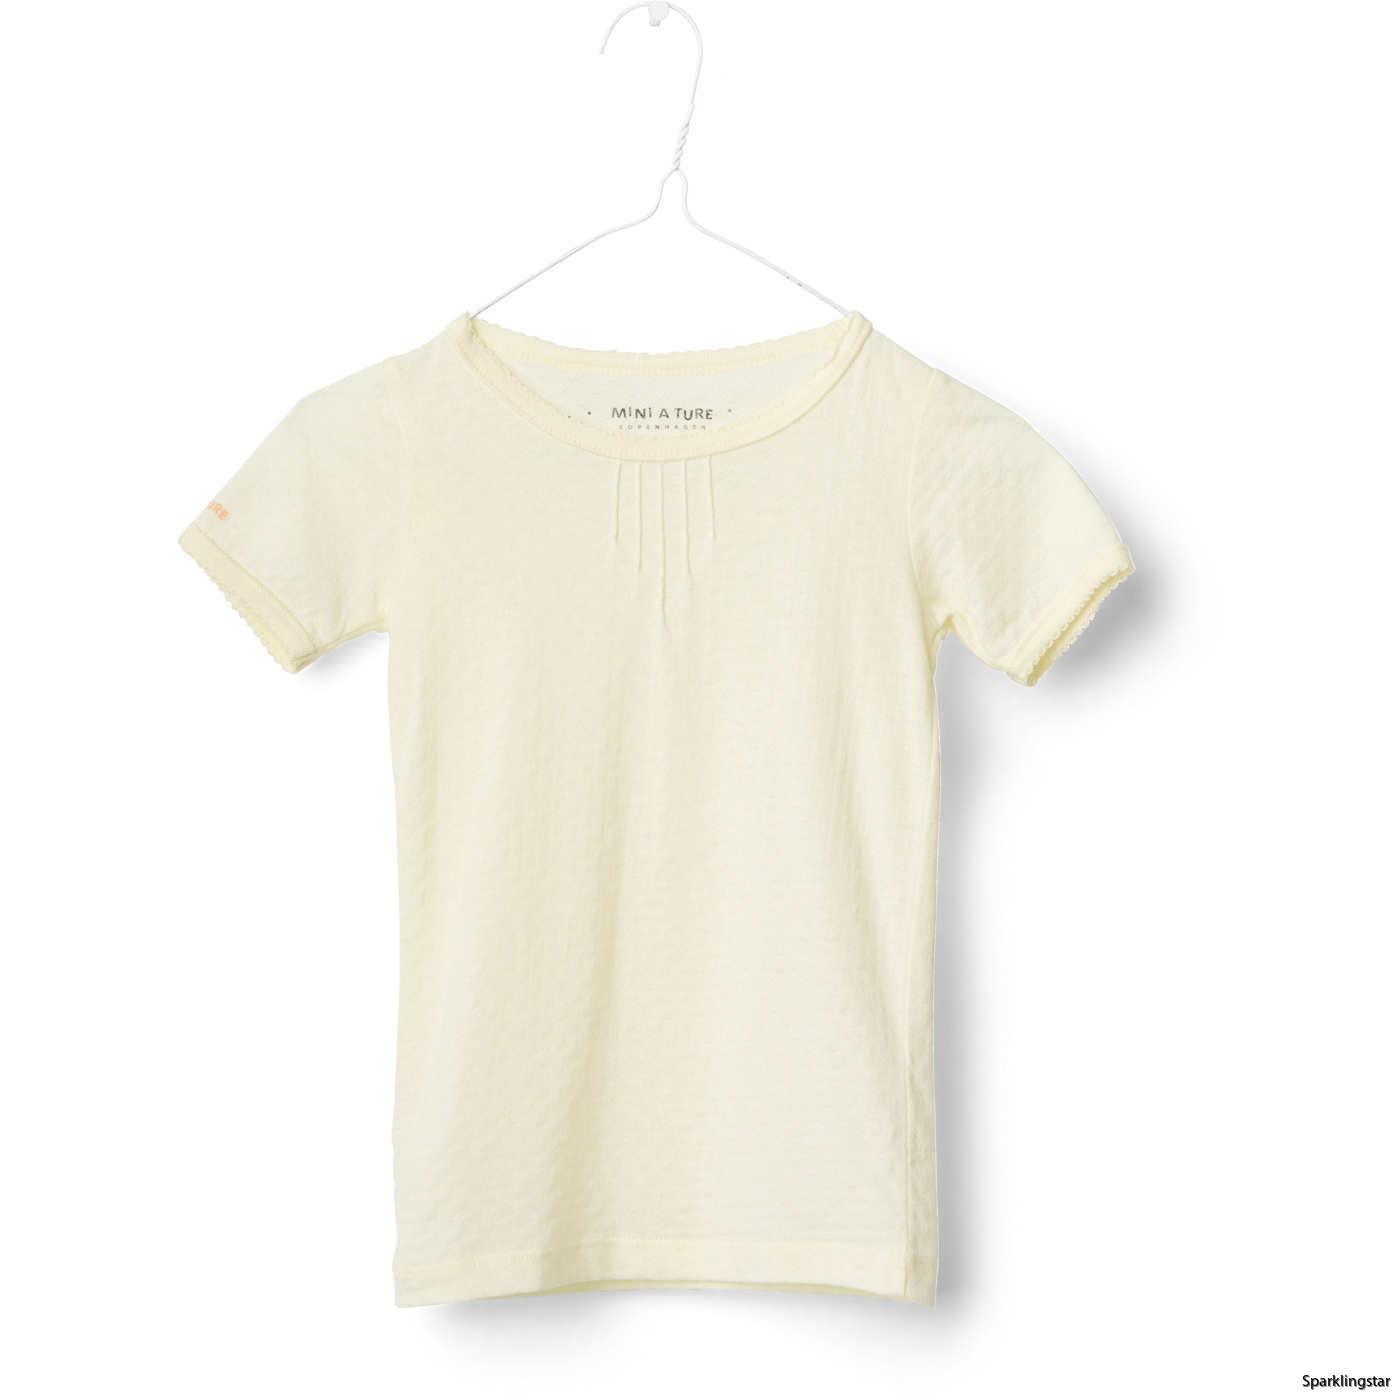 Mini A Ture Elly T-shirt Yellow